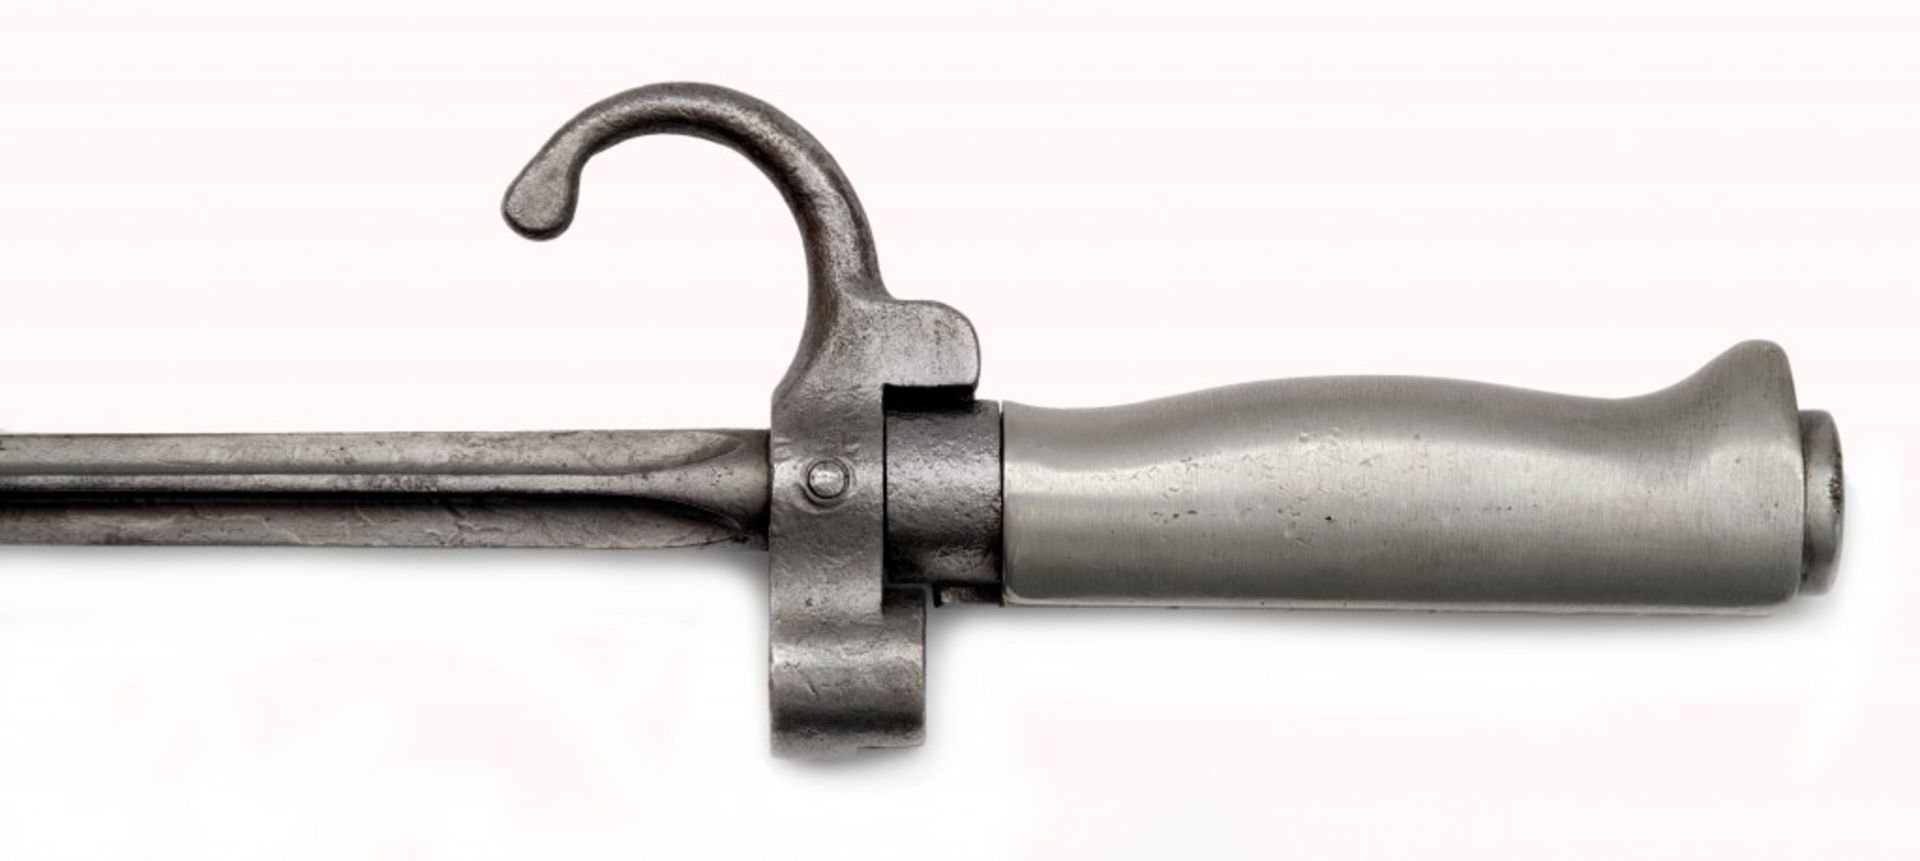 Nadelbajonett für Lebel Gewehr (Rosalie) Modell 1866, erstes Modell - Bild 3 aus 3